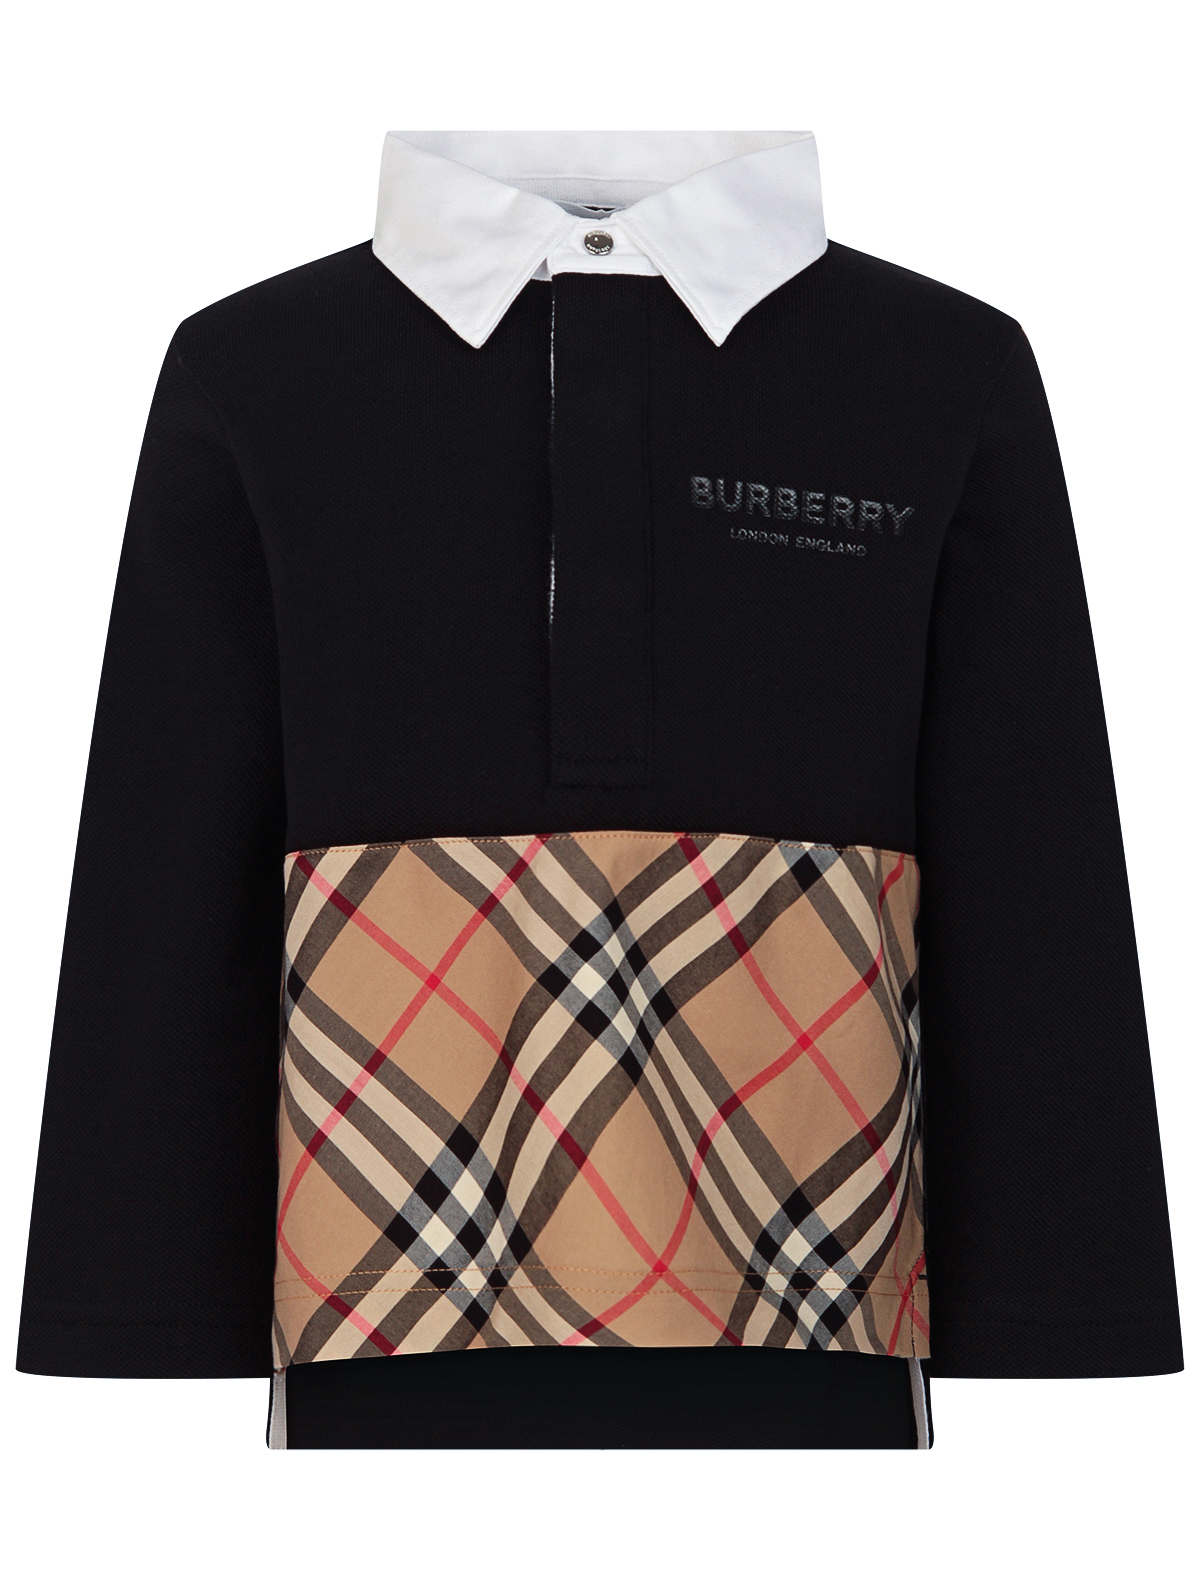 Burberry поло. Поло Burberry. Polo Burberry uniform. Детское поло Burberry. Поло Burberry мужское.